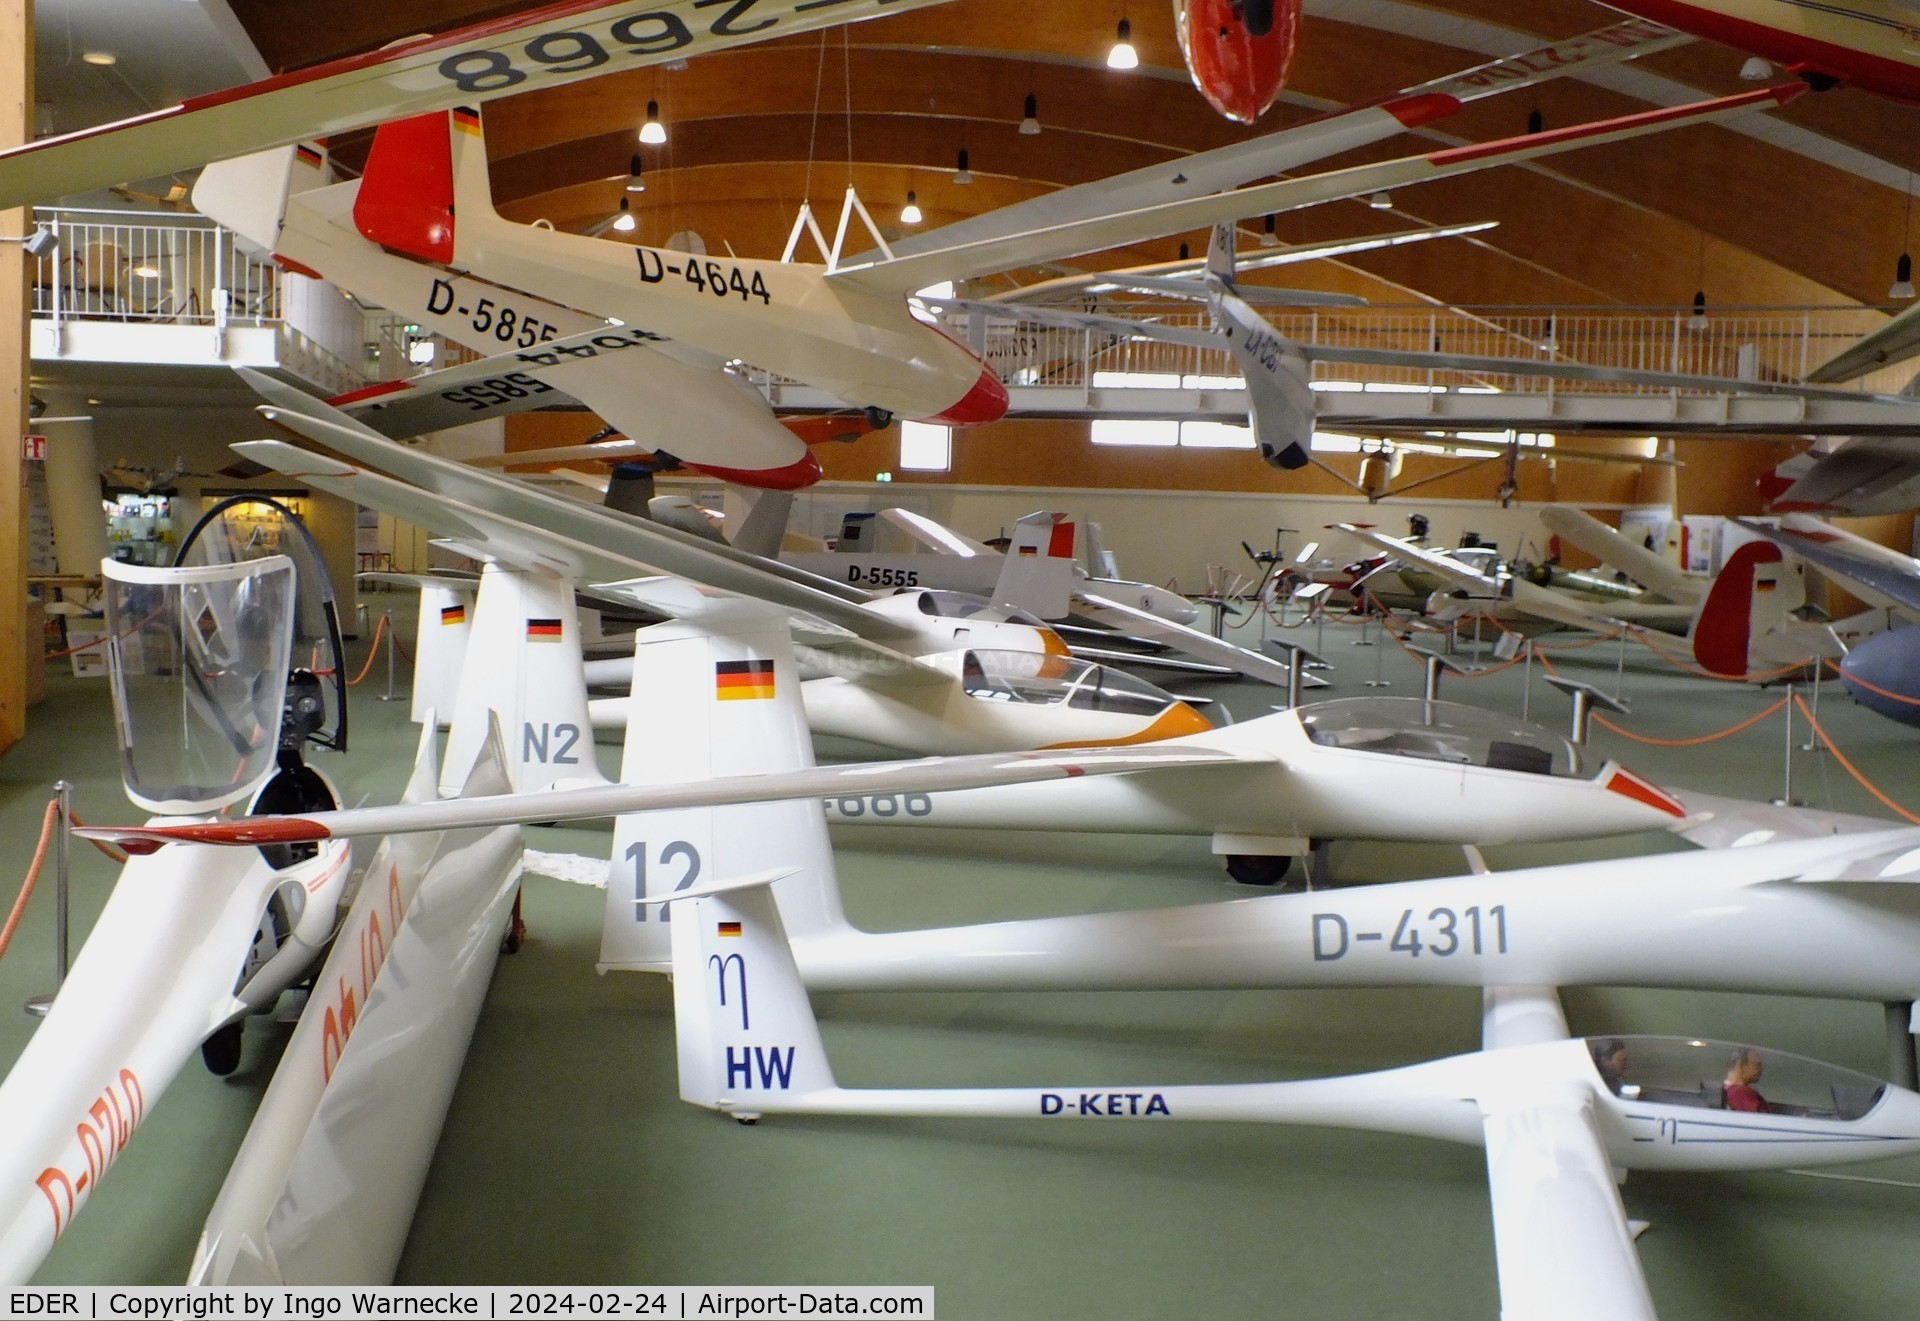 EDER Airport - inside the big hangar of the Deutsches Segelflugmuseum mit Modellflug (German Soaring Museum with Model Flight) at Gersfeld - Wasserkuppe airfield